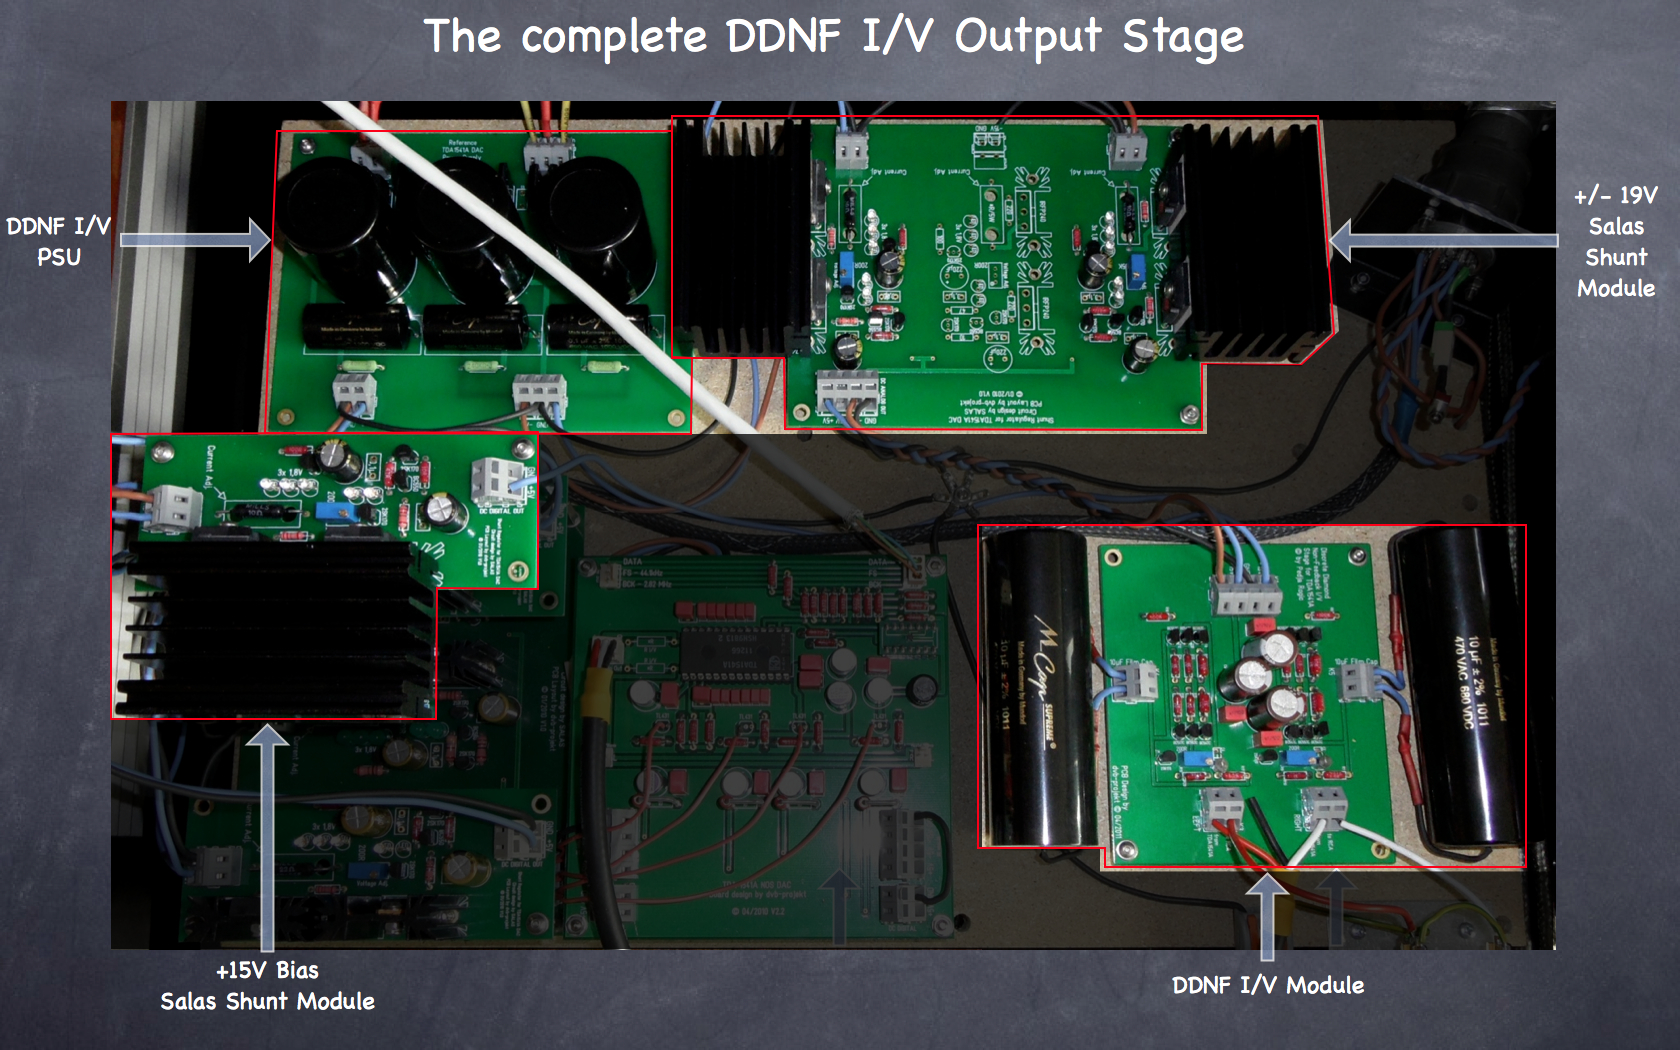 Complete_DDNF_I:V_Output_Stage